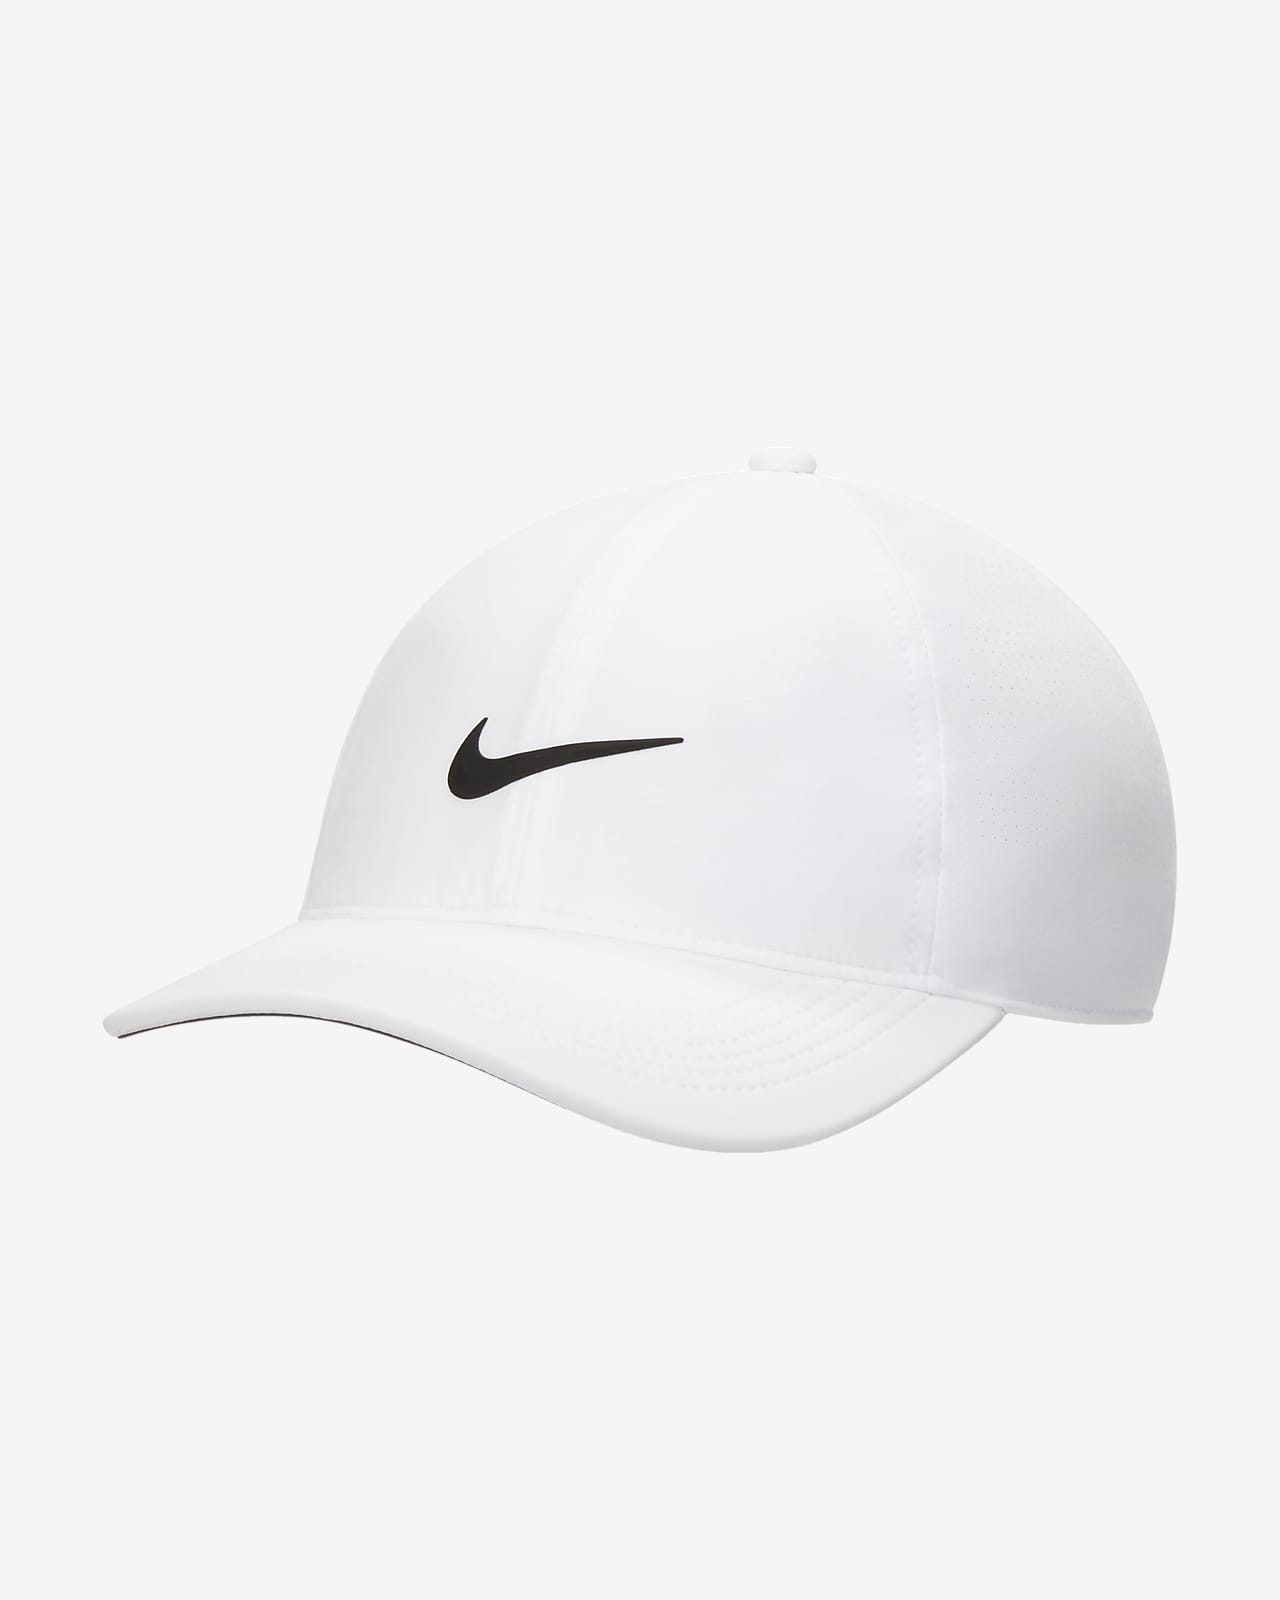 Nike Dri-FIT ADV AeroBill Heritage86 Women's Perforated Golf Hat